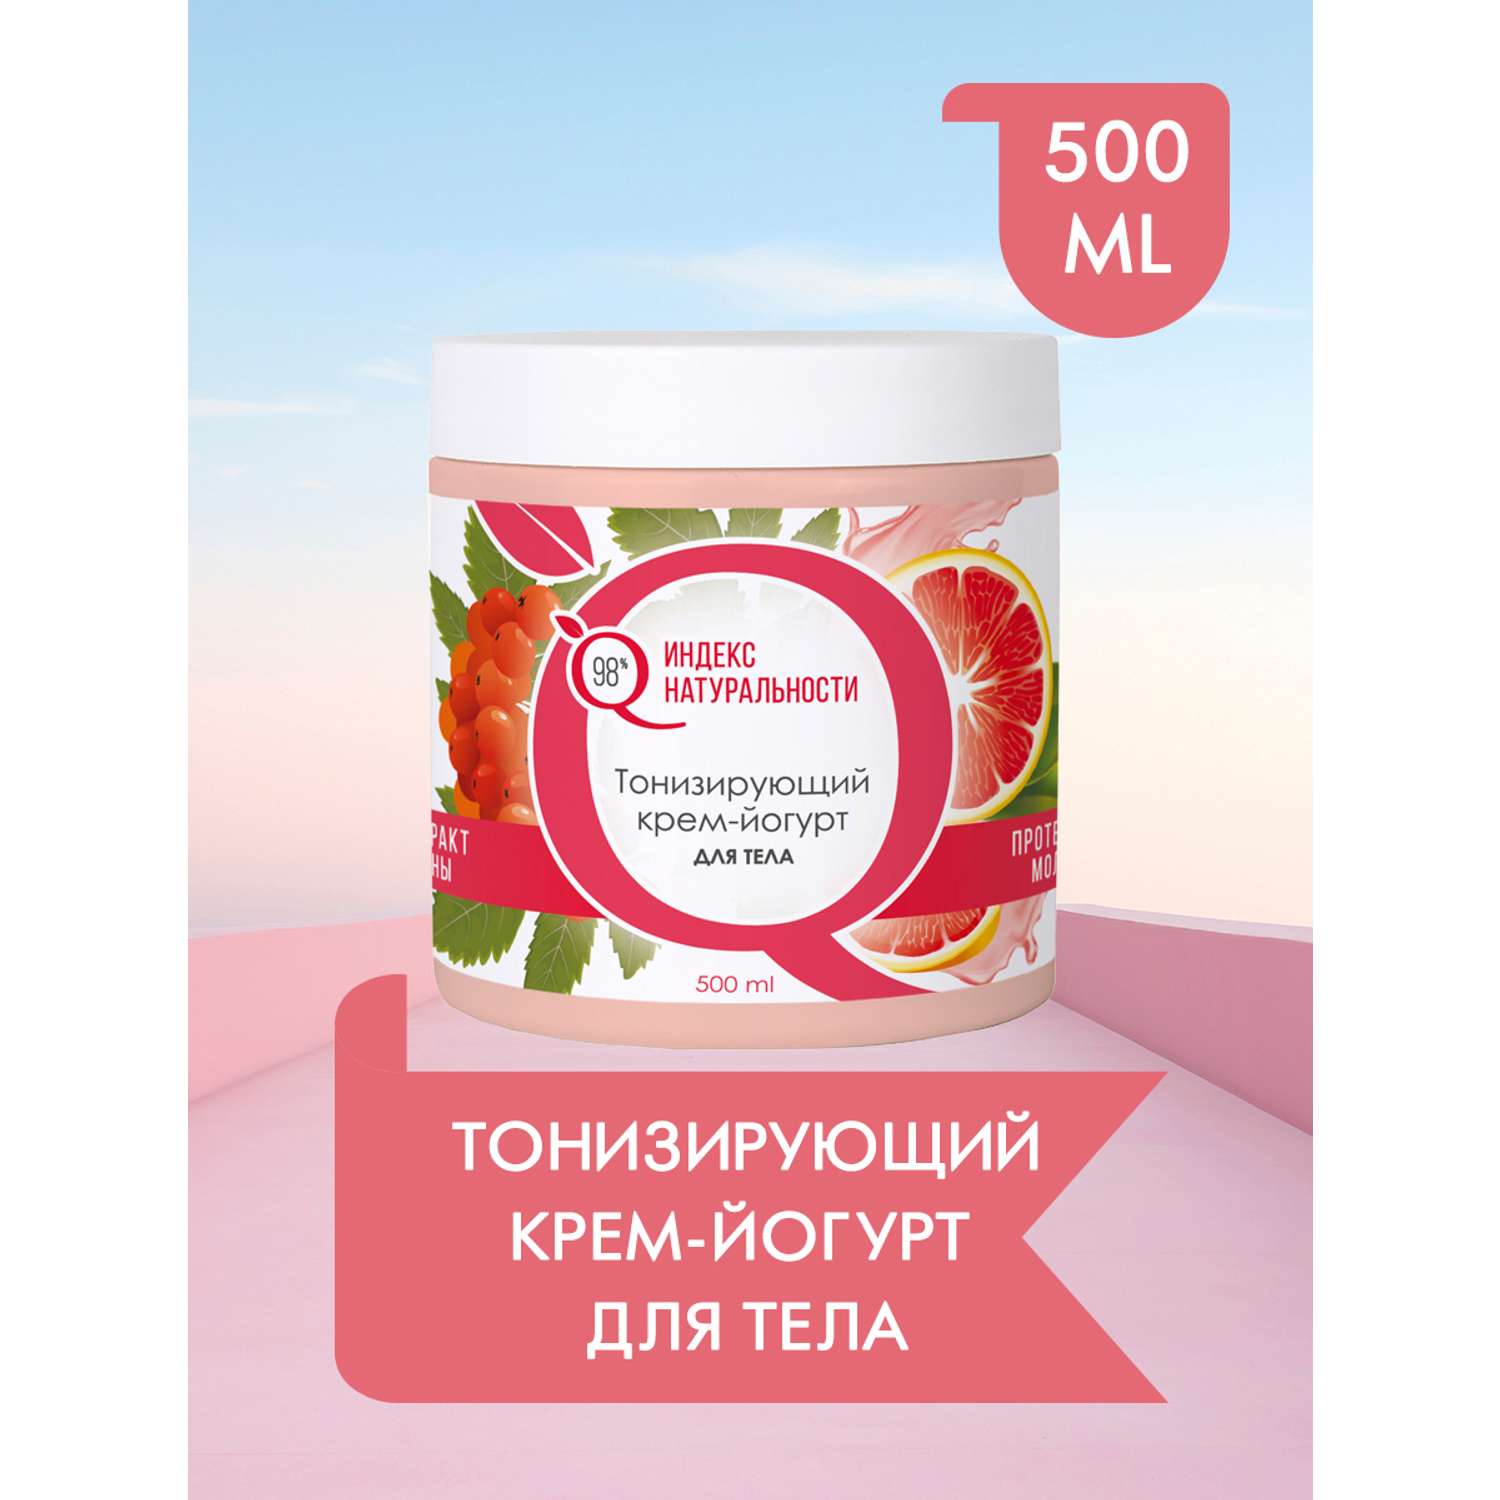 Крем-йогурт для тела Ichthyonella йогурт 500 мл - фото 1